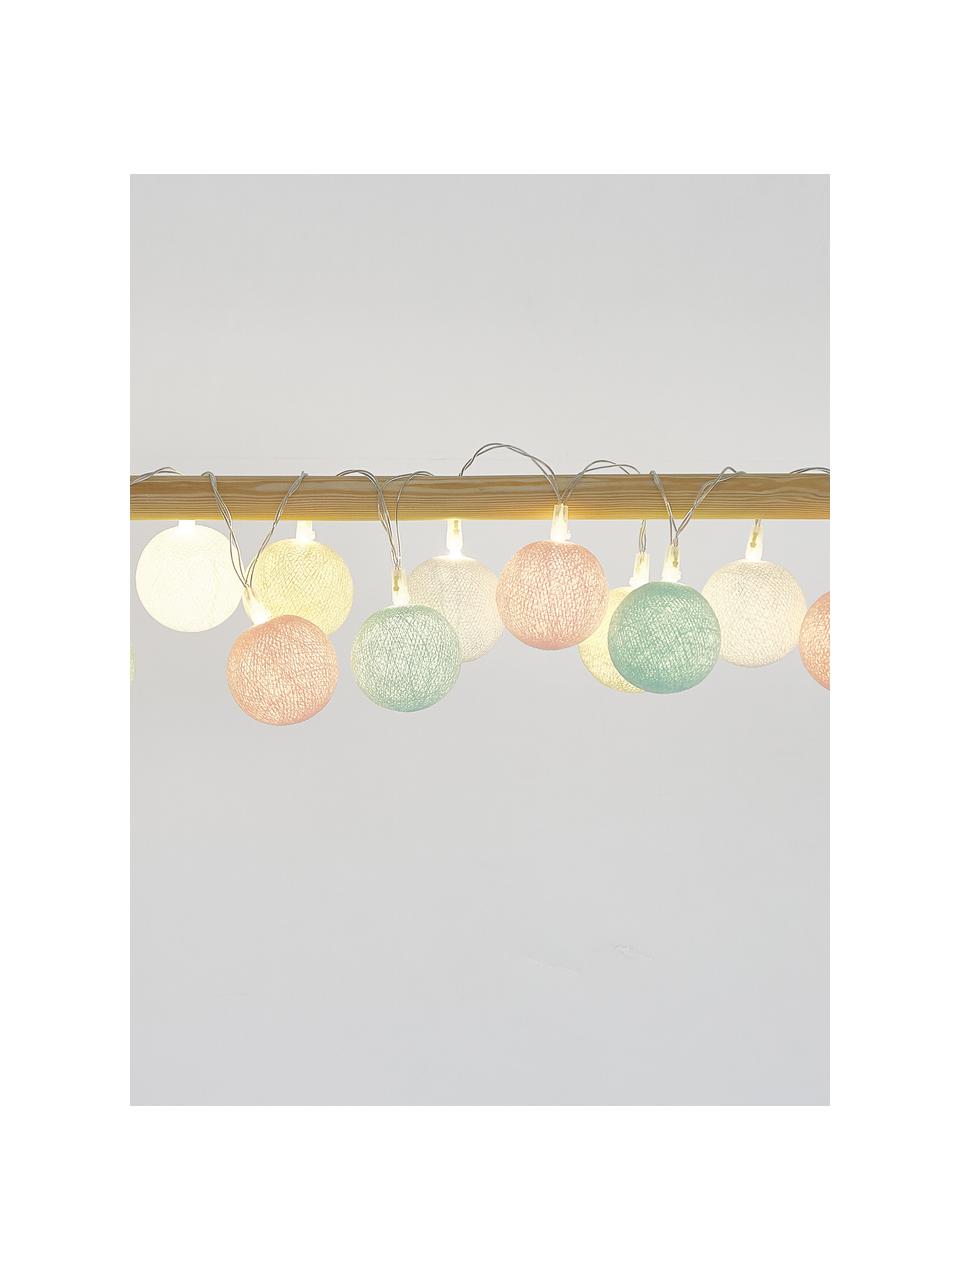 Guirlande lumineuse LED Colorain, 378 cm, 20 lampions, Blanc, tons pastels, long. 378 cm